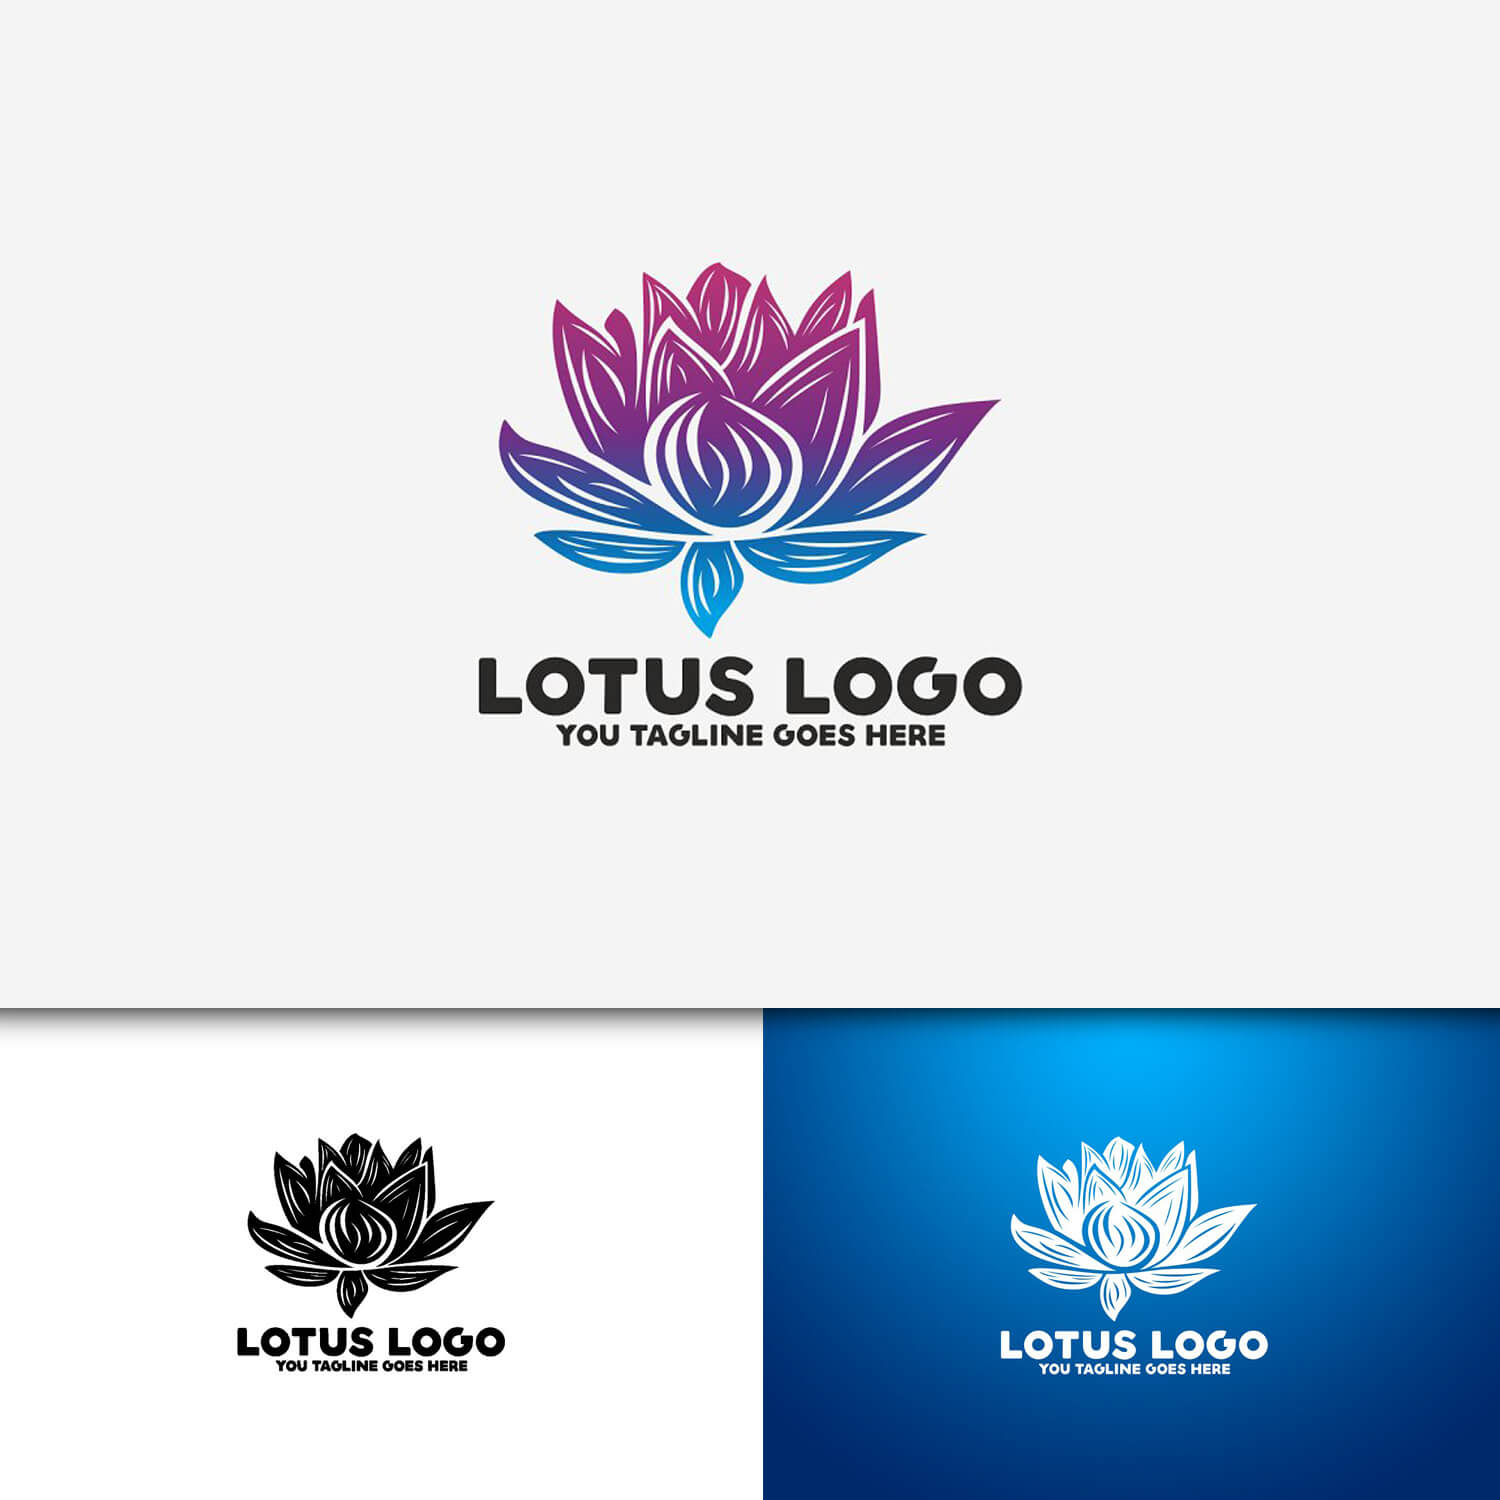 Blue and purple Lotus logo.